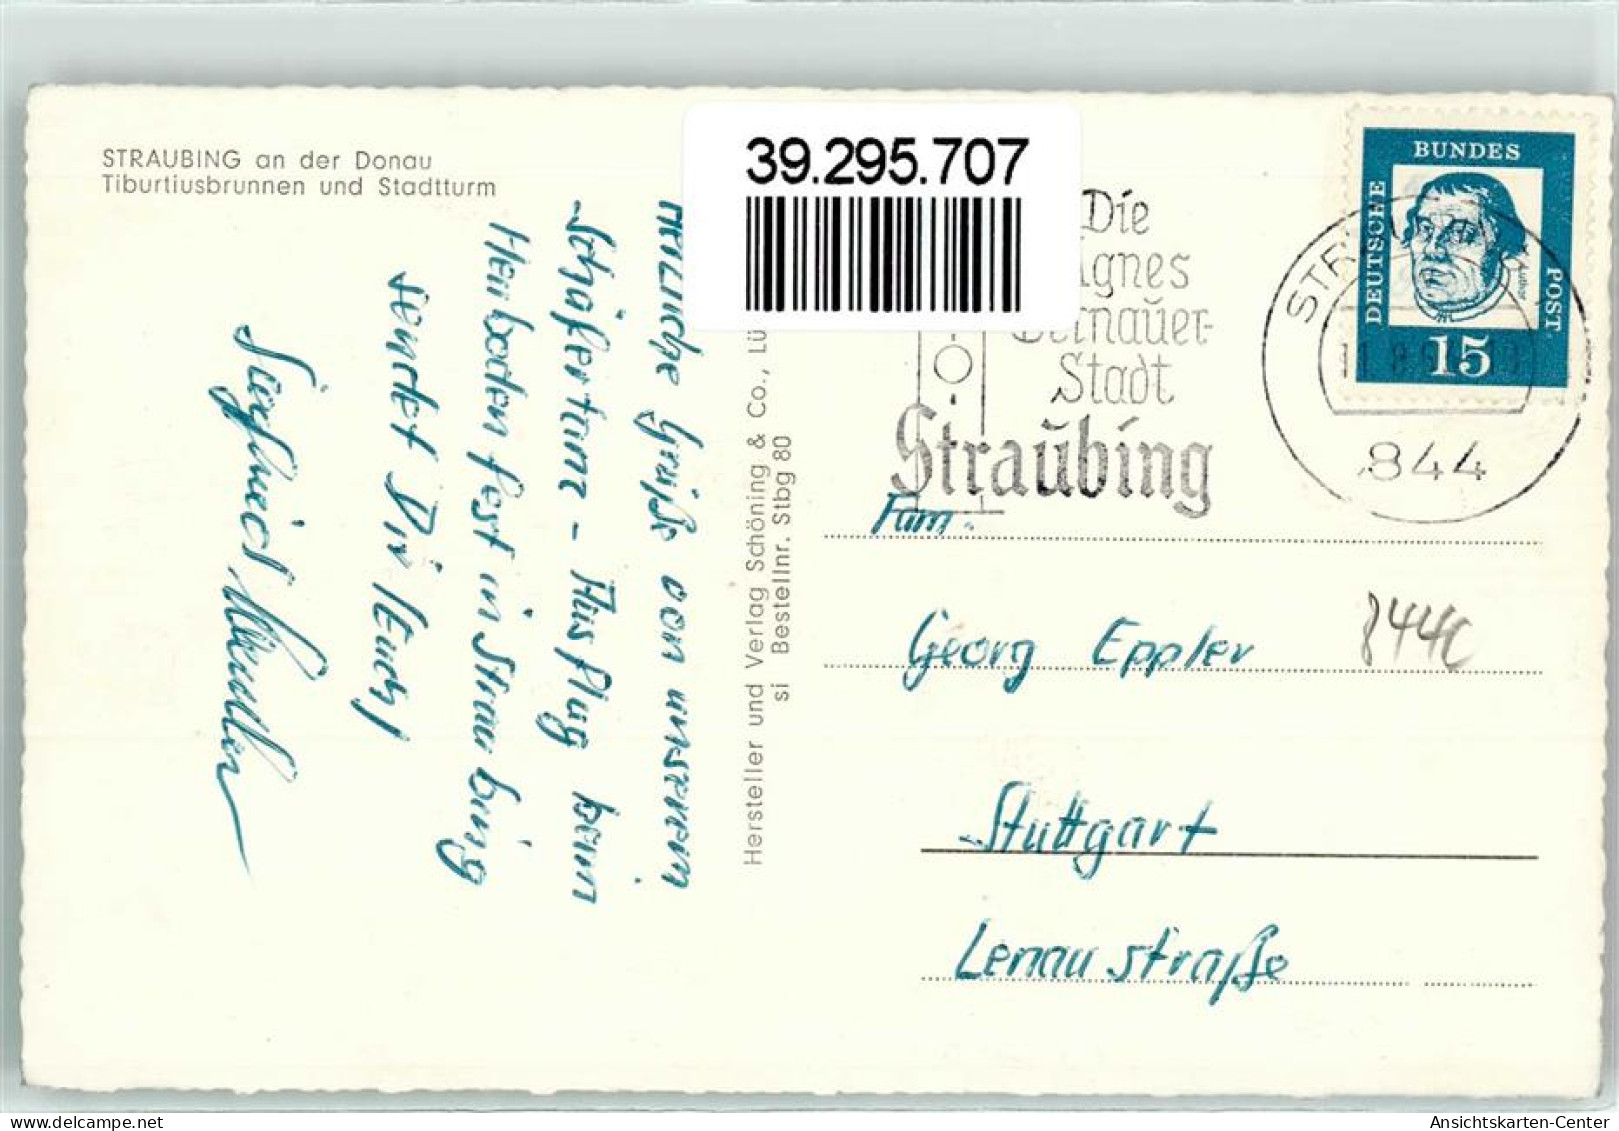 39295707 - Straubing - Straubing